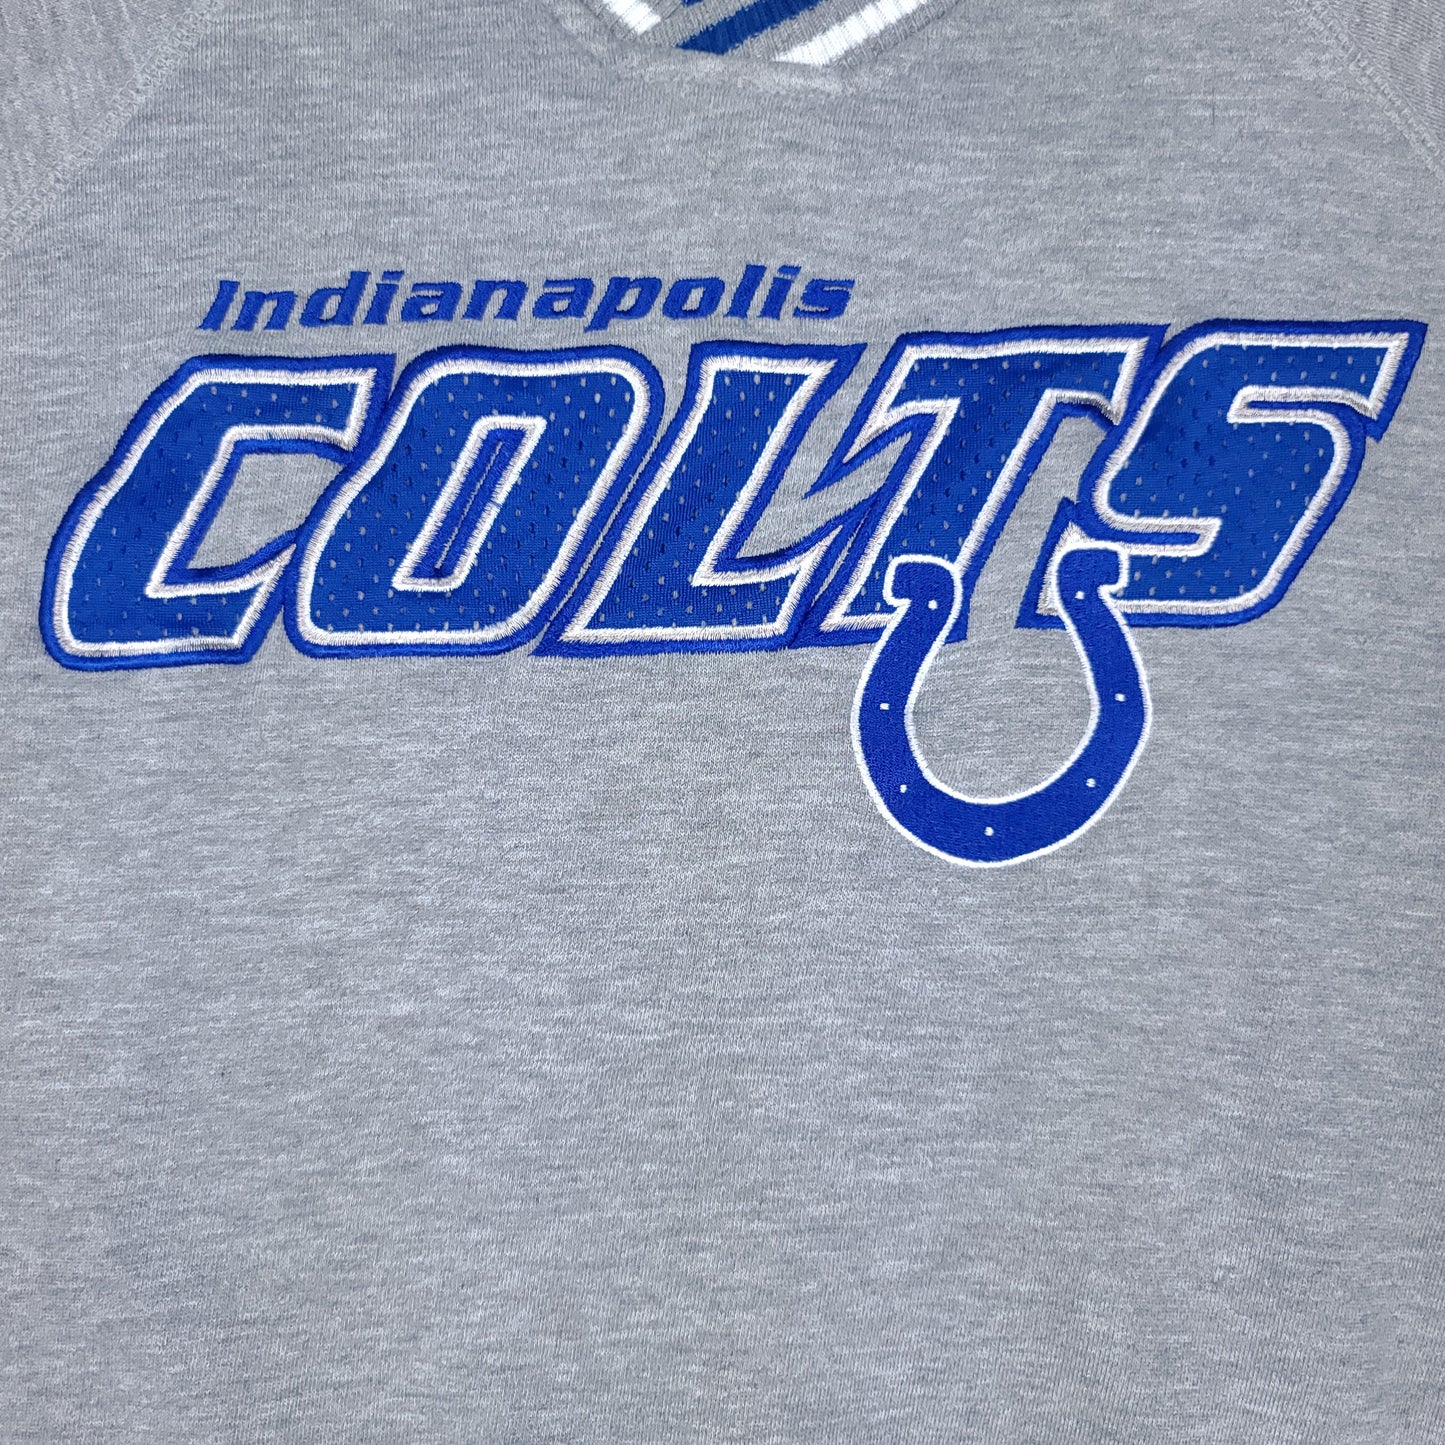 Vintage Indianapolis Colts Lee Sport Sweatshirt